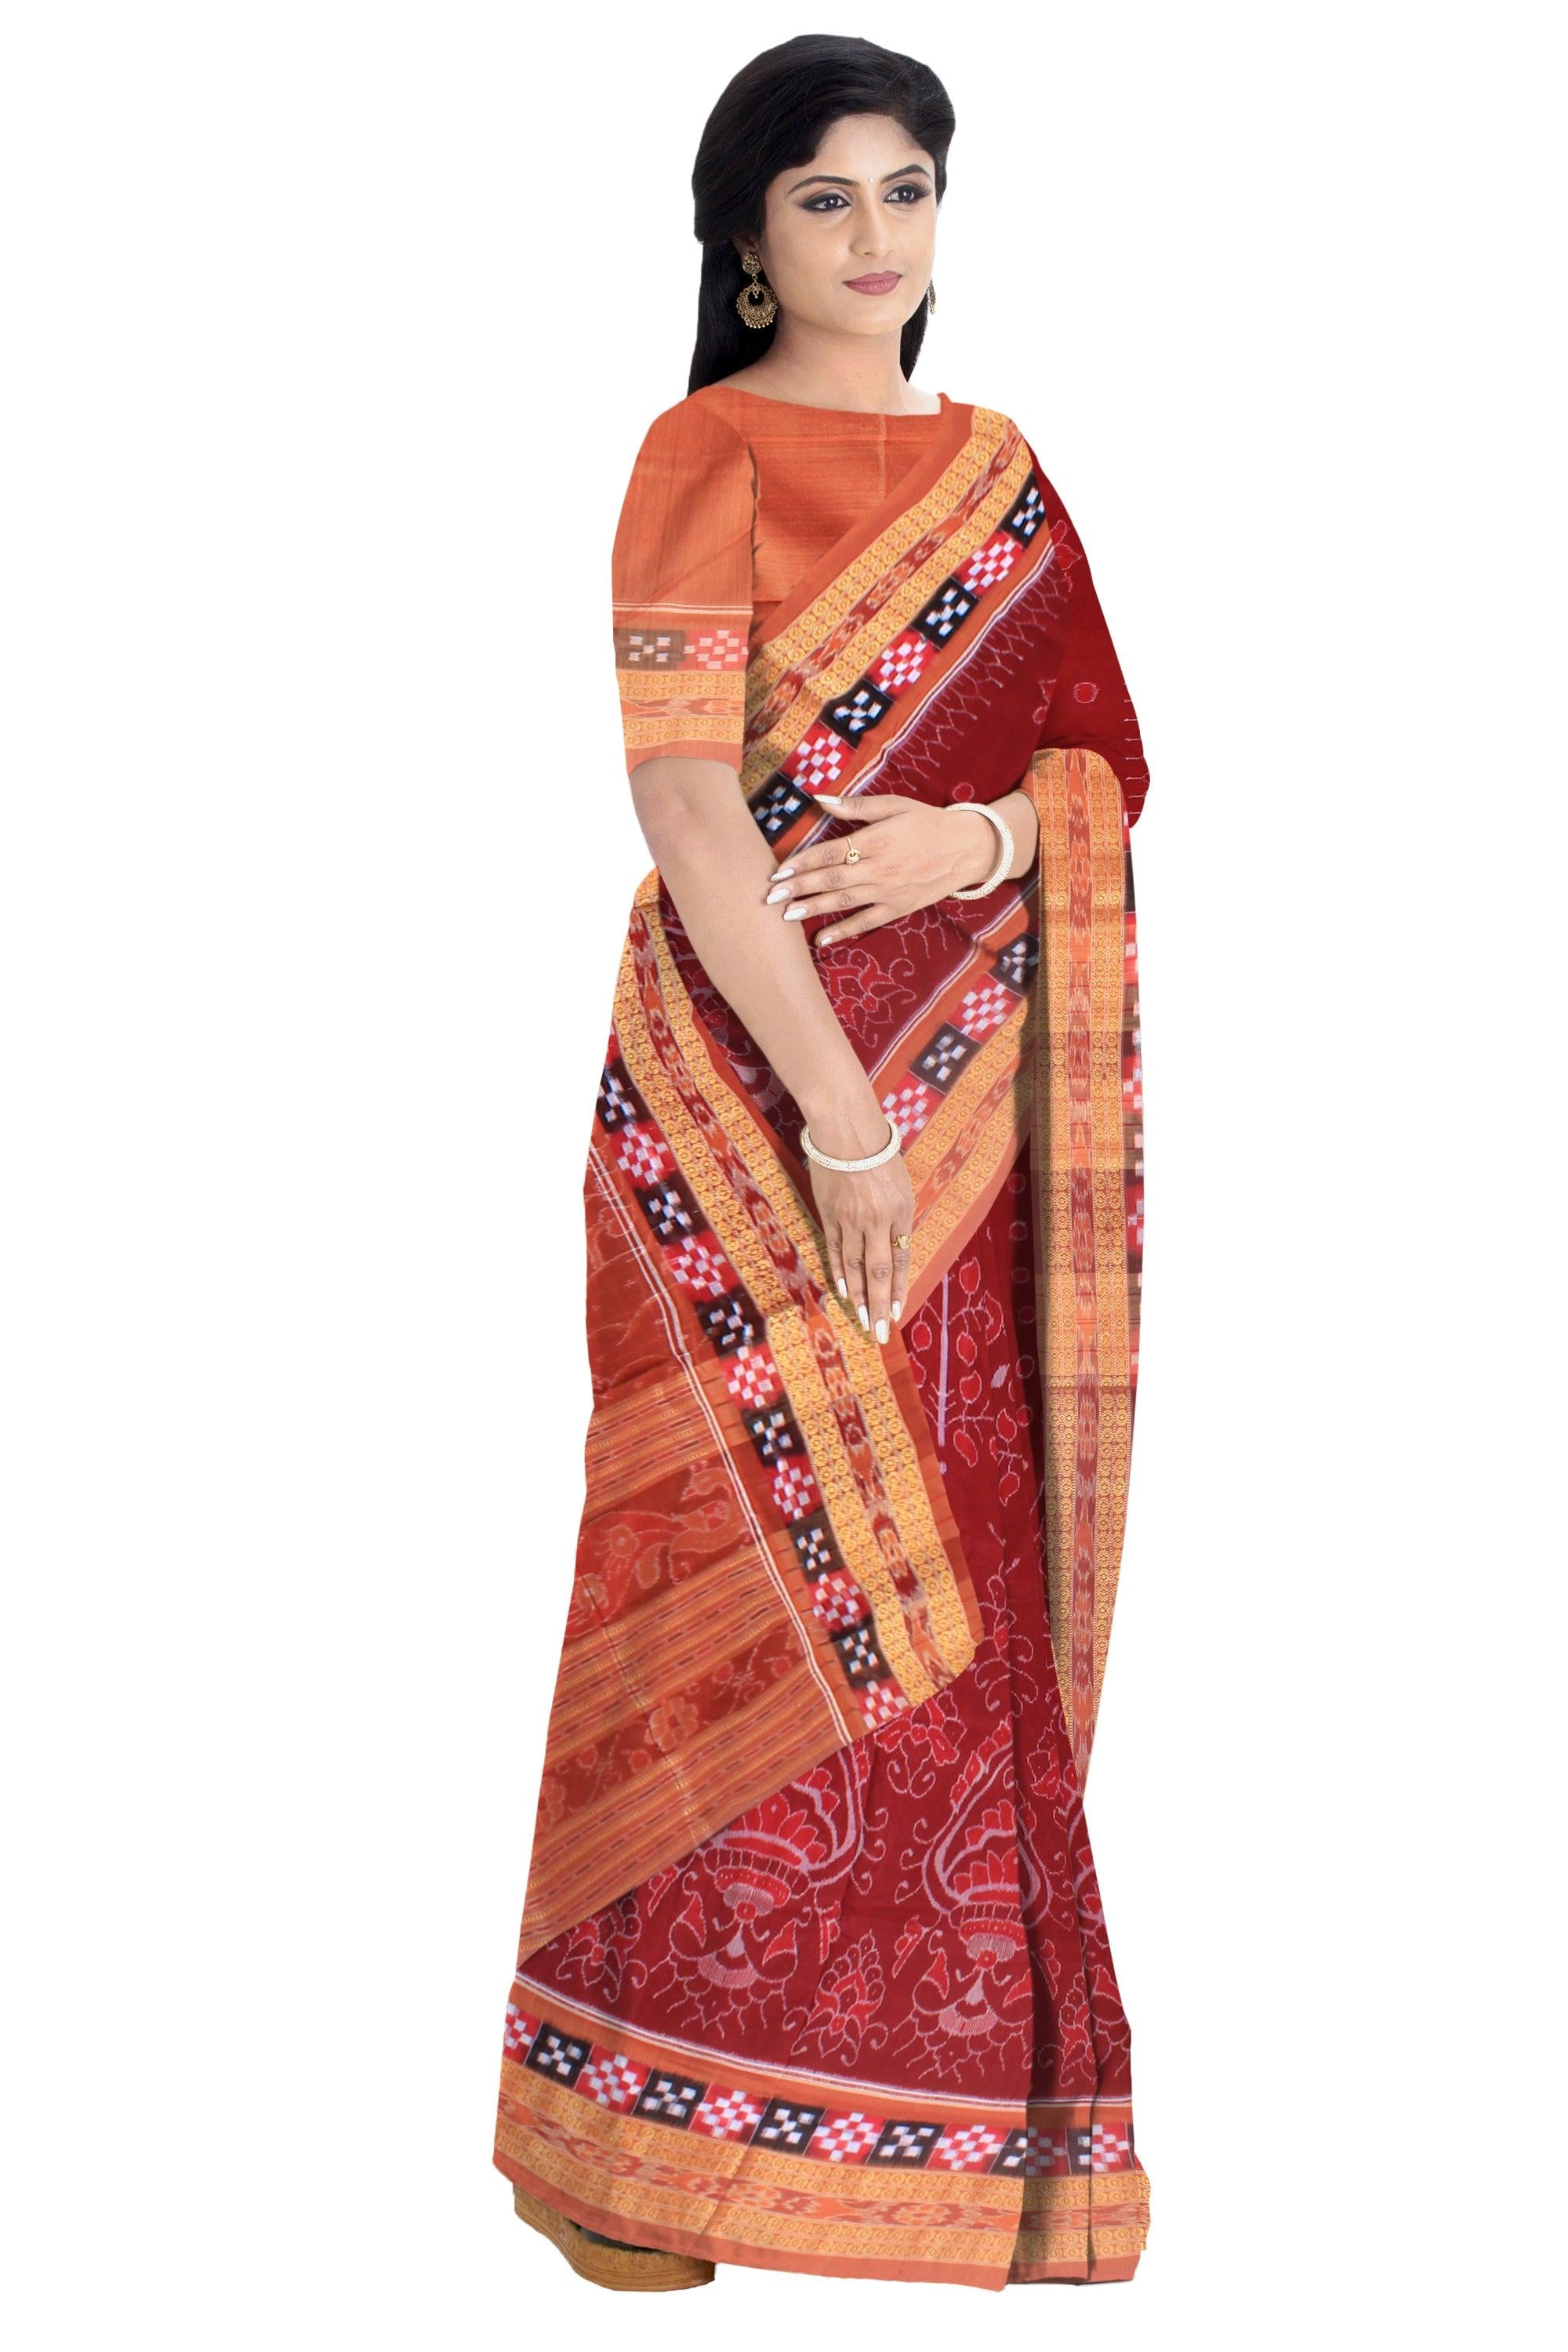 Dhadi sapta sambalpuri  cotton saree in maroon  and salmon color, with blouse piece. - Koshali Arts & Crafts Enterprise